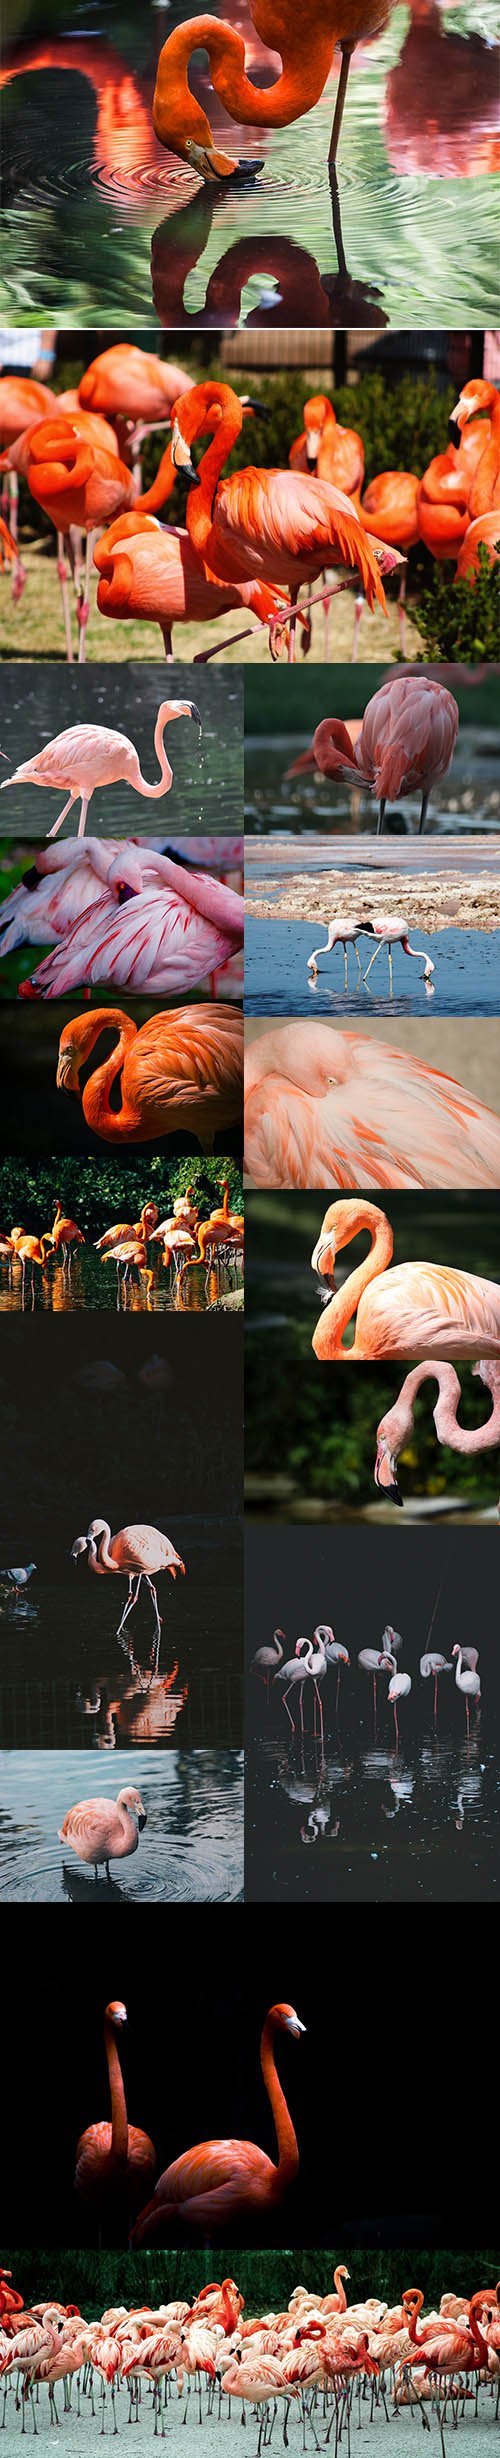 Flamingo Bundle - UHQ Stock Photo Vol 2